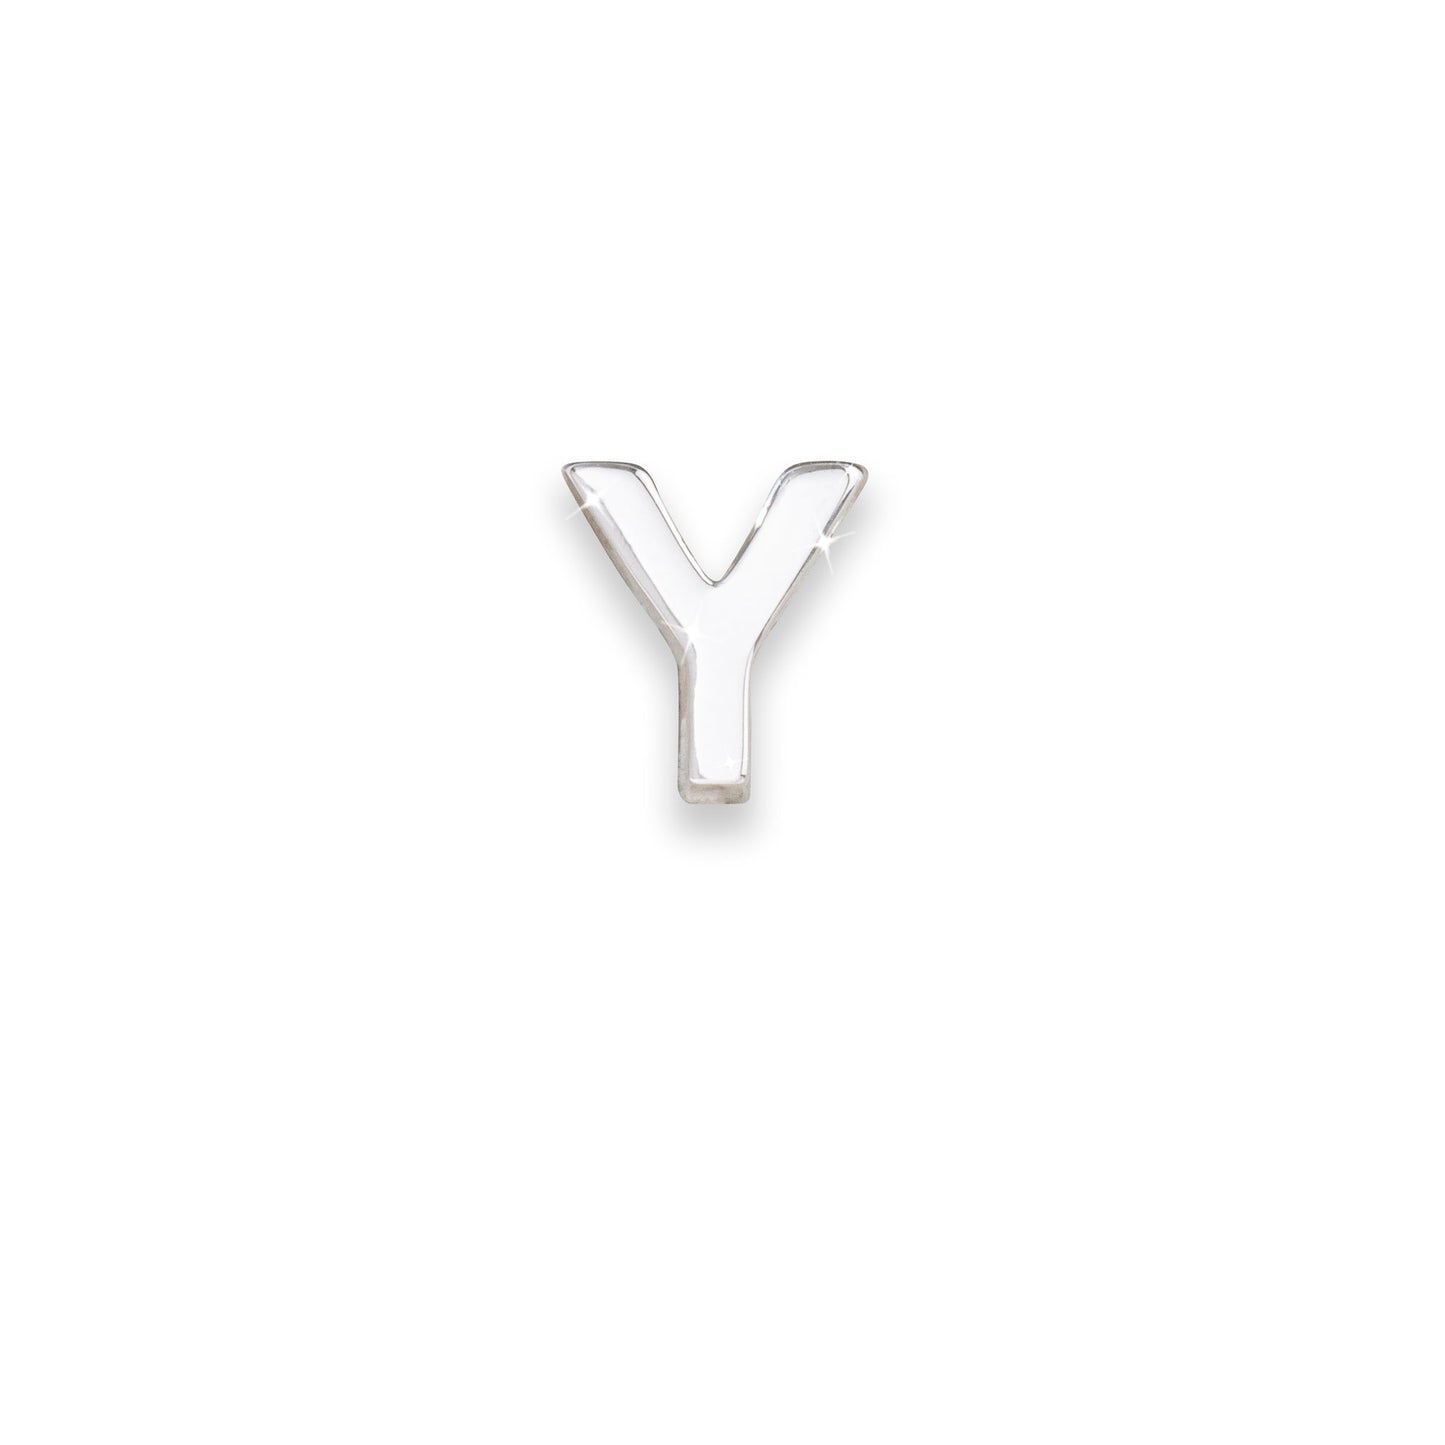 Silver letter Y monogram charm for necklaces & bracelets